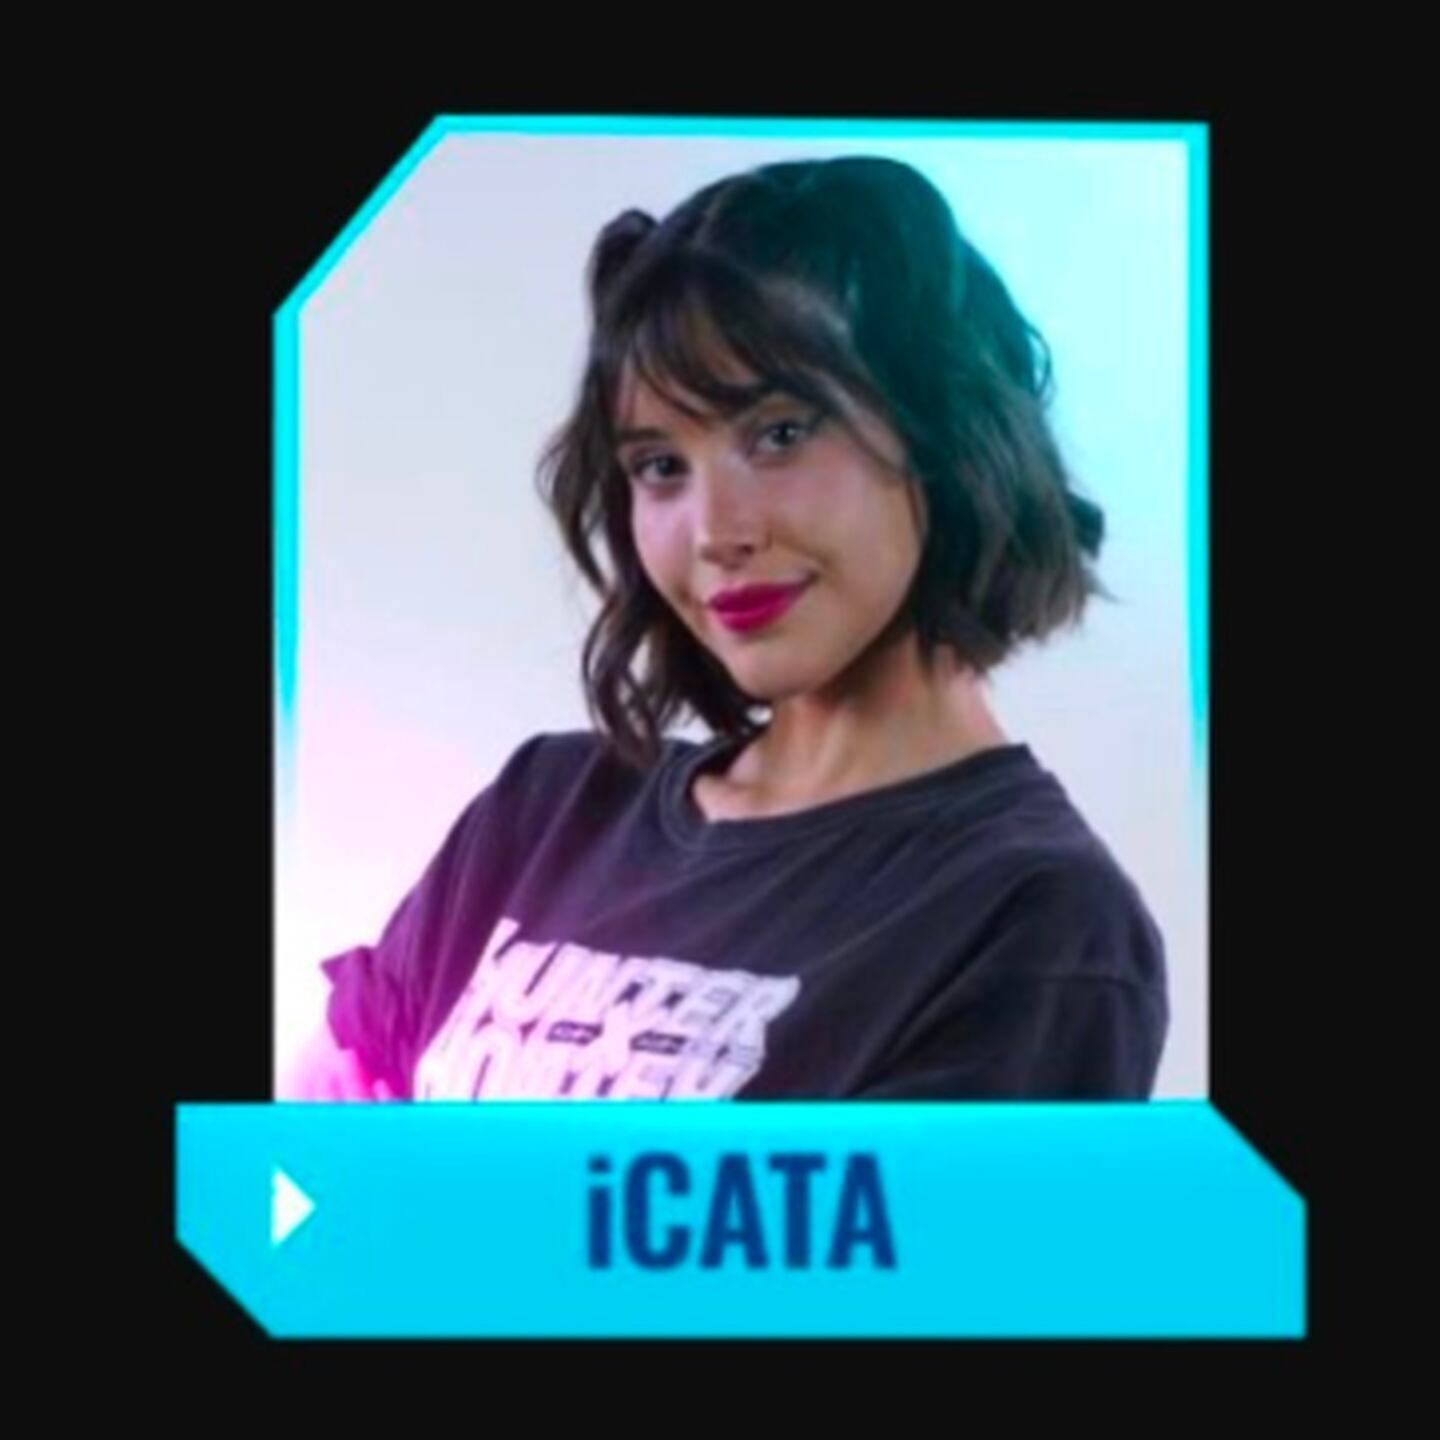 Catalina Salazar, iCata, participante de "Gran Hermano" Chile.